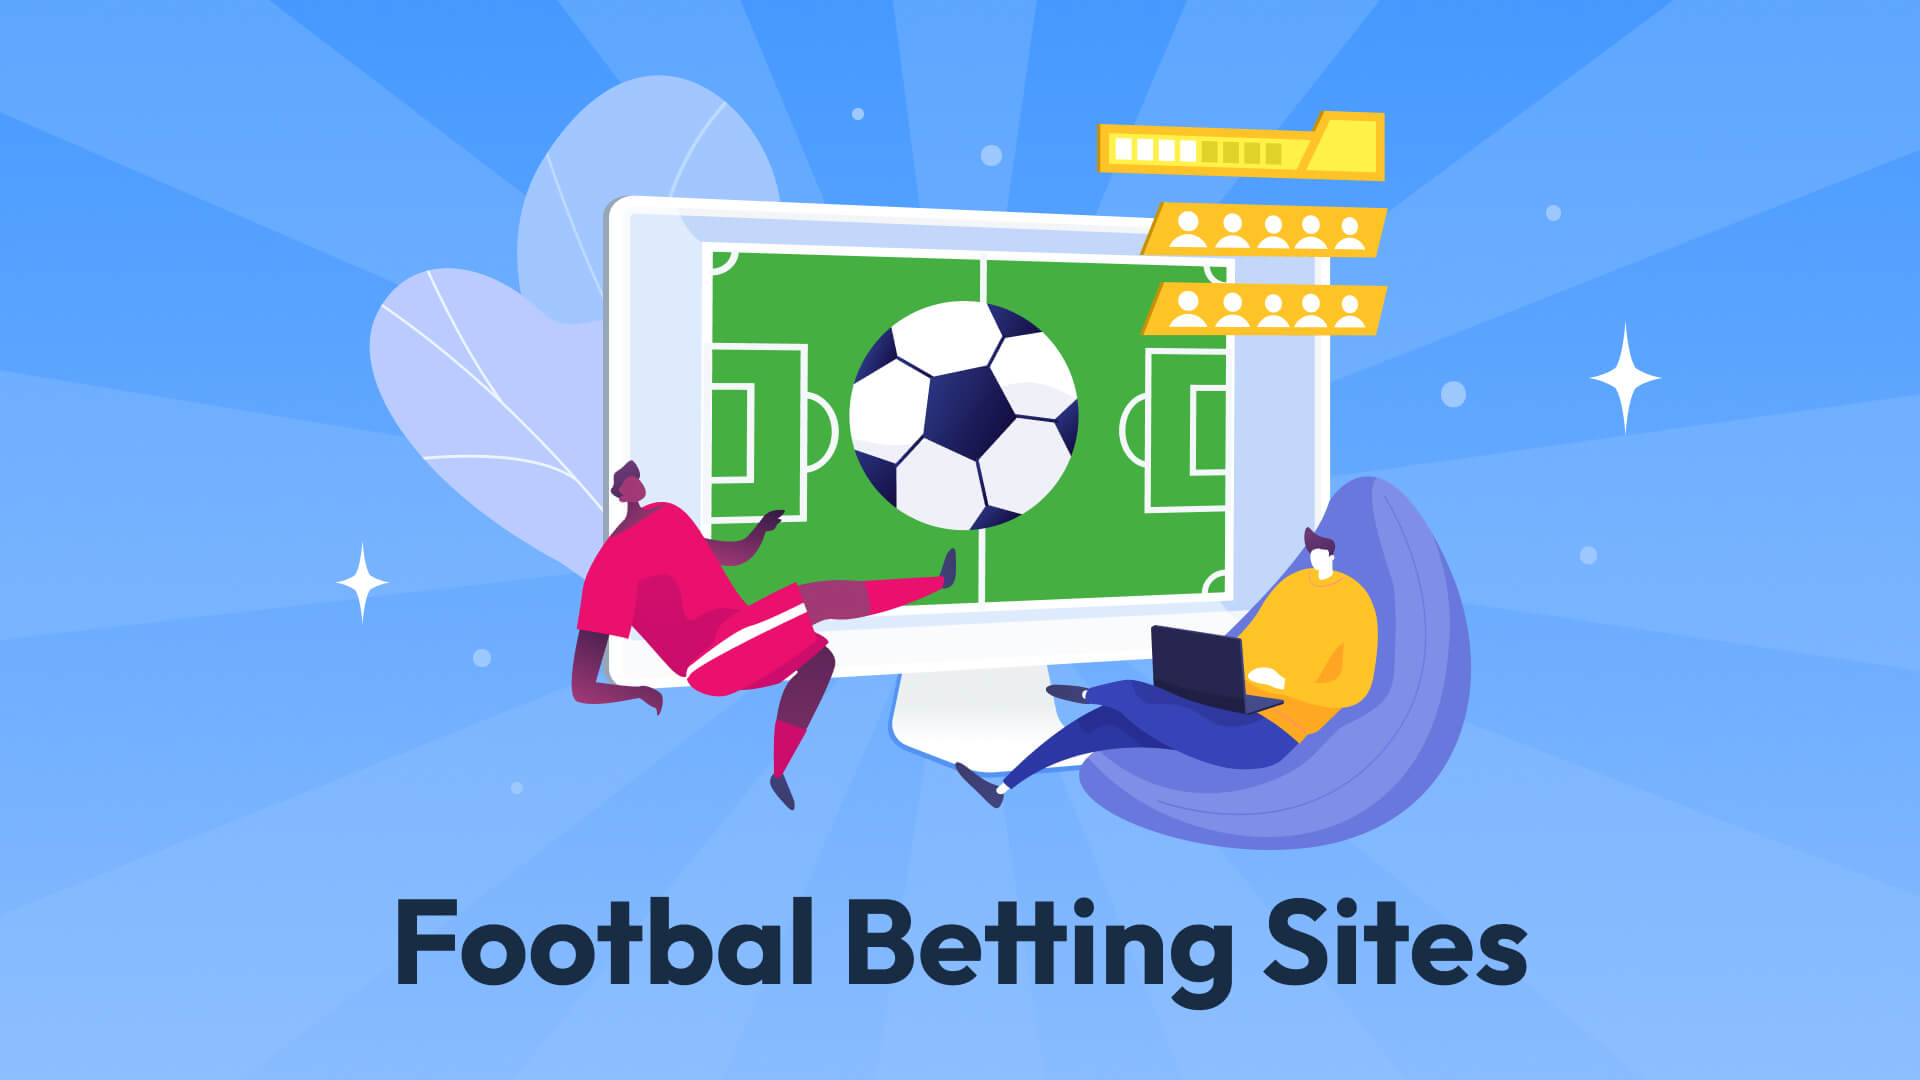 Best Football Betting Sites